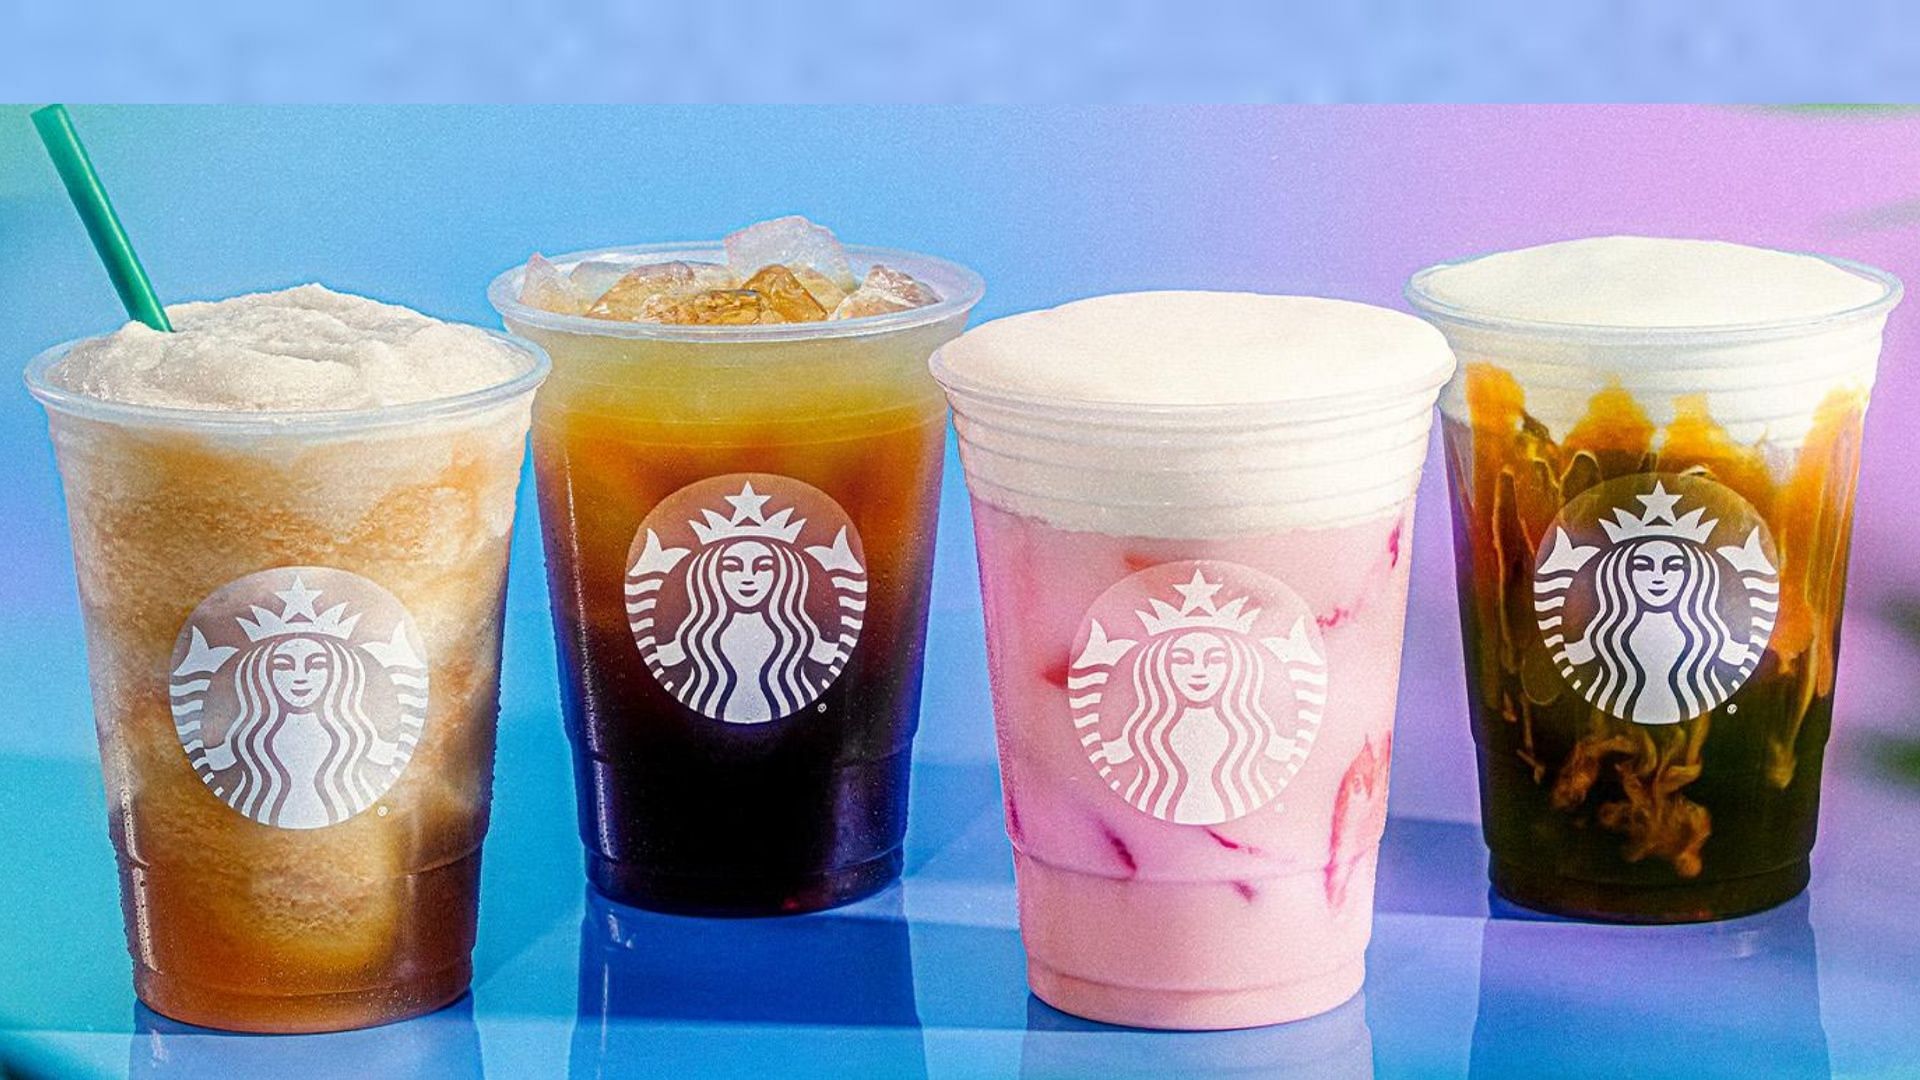 Starbucks introduces its new Summer Remix menu line-up (Image via Starbucks)